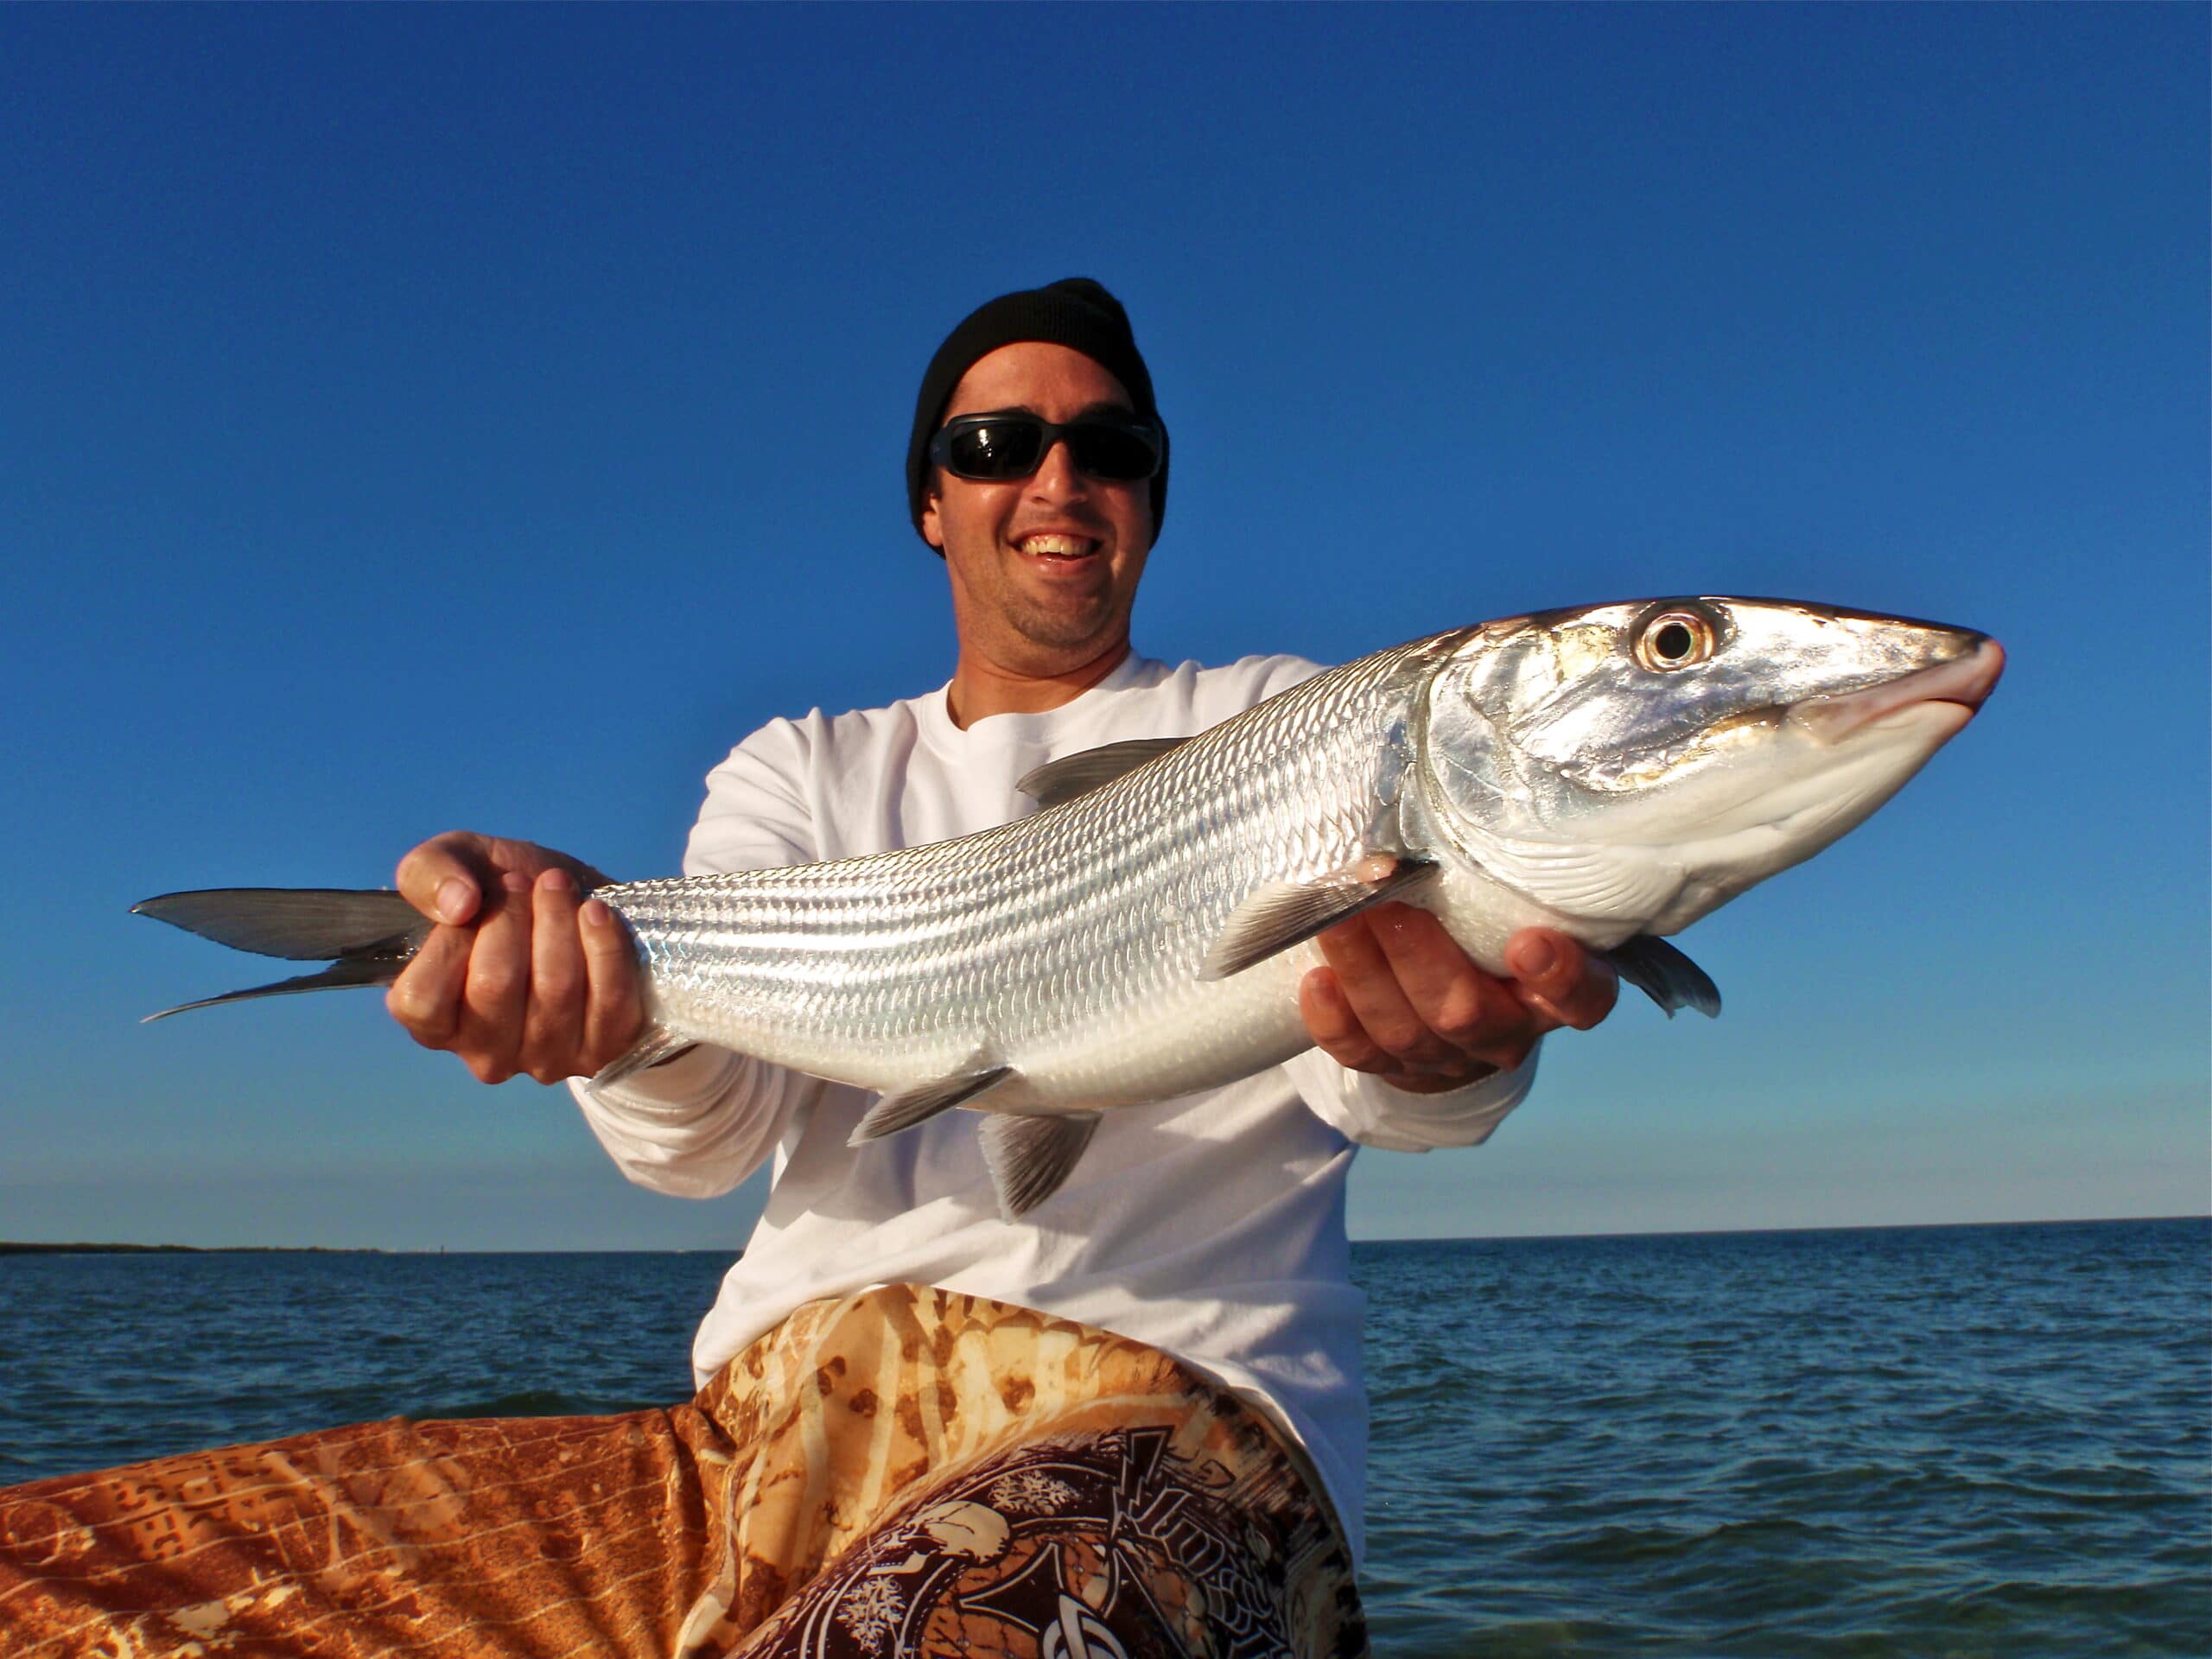 Miami Bone-fishing In The Spring|Great Bonefish Action In Miami FLorida